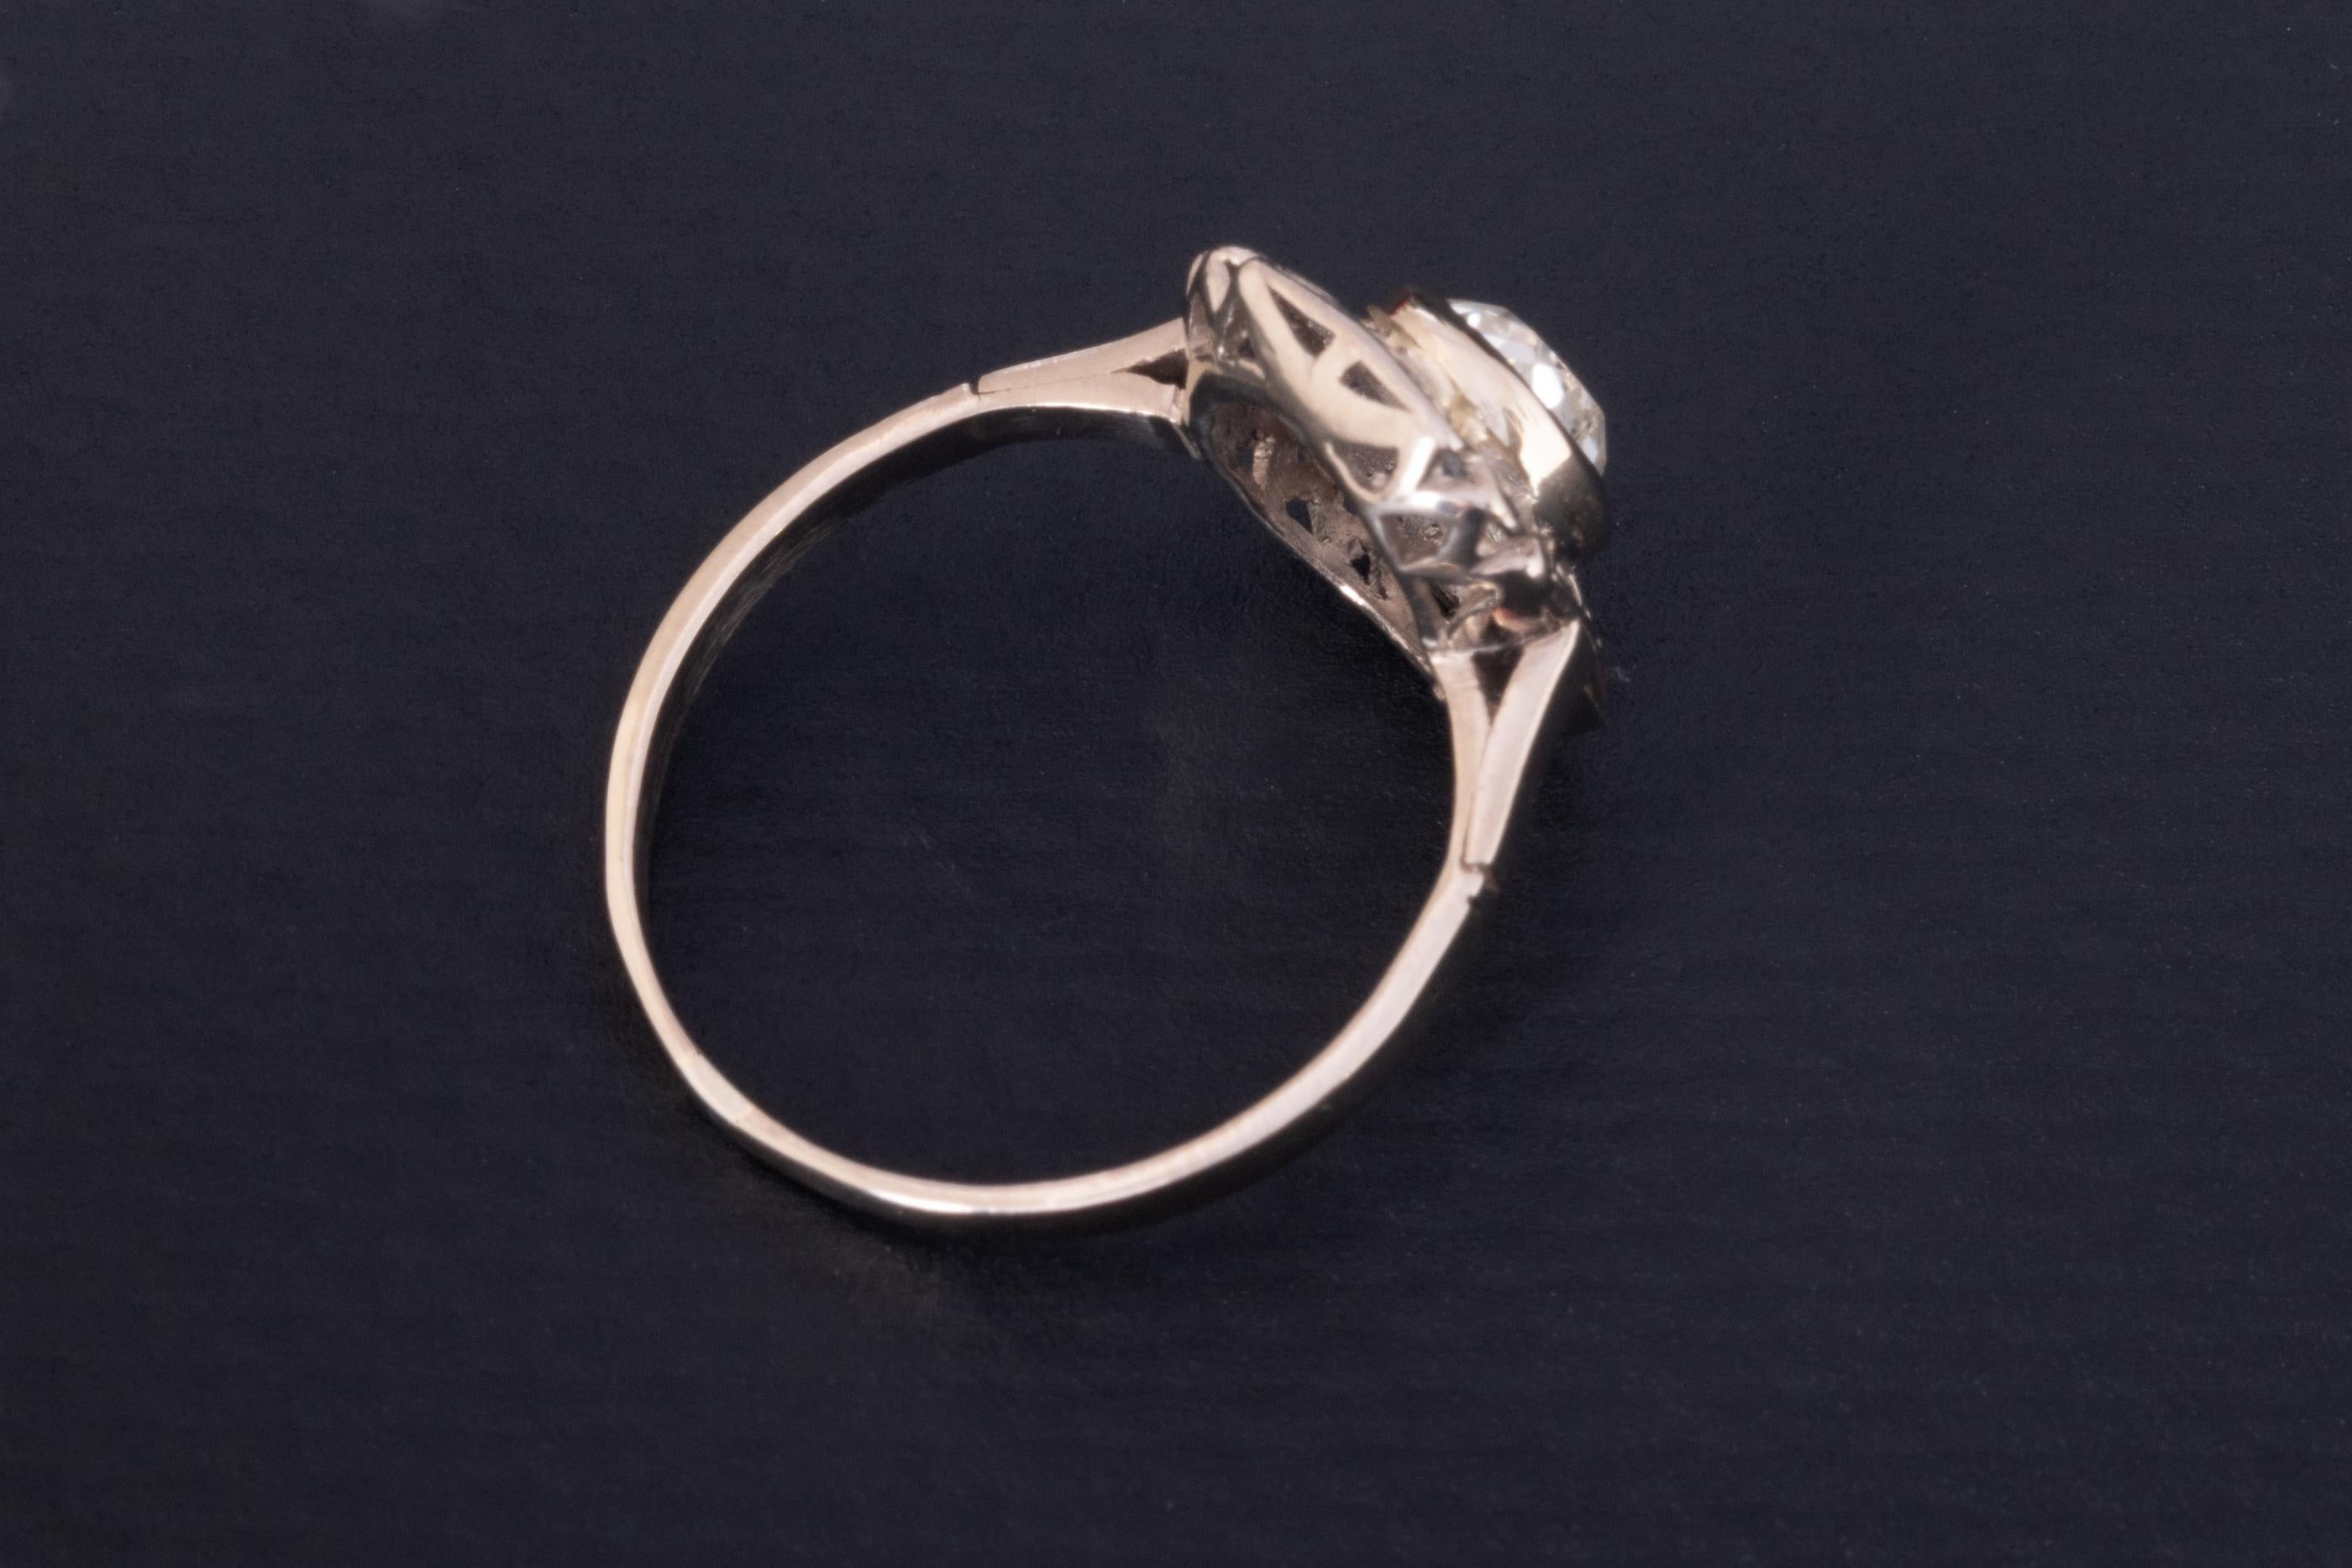 Antique Engagement 1.1 CT Diamond Solitaire Ring, Old European Cut Diamond Ring 1